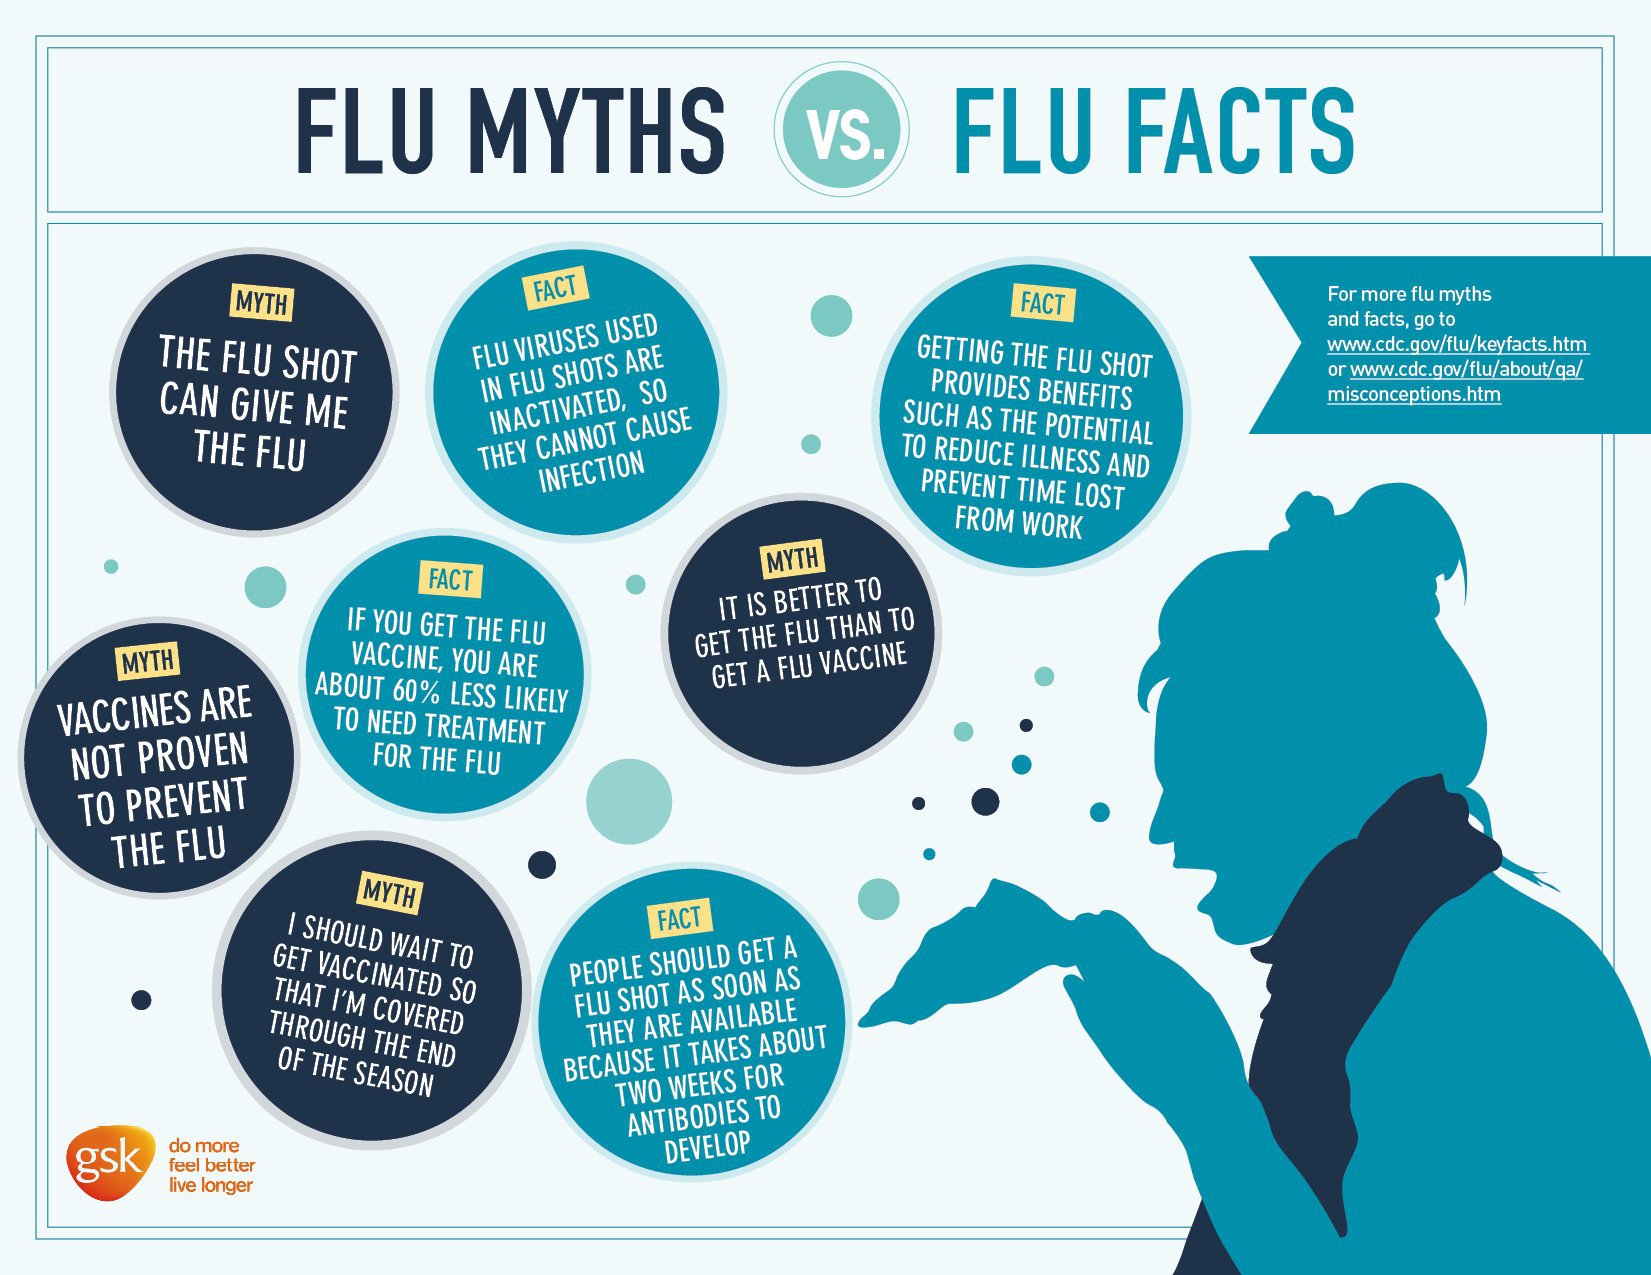 flu myths versus flu facts, infographic